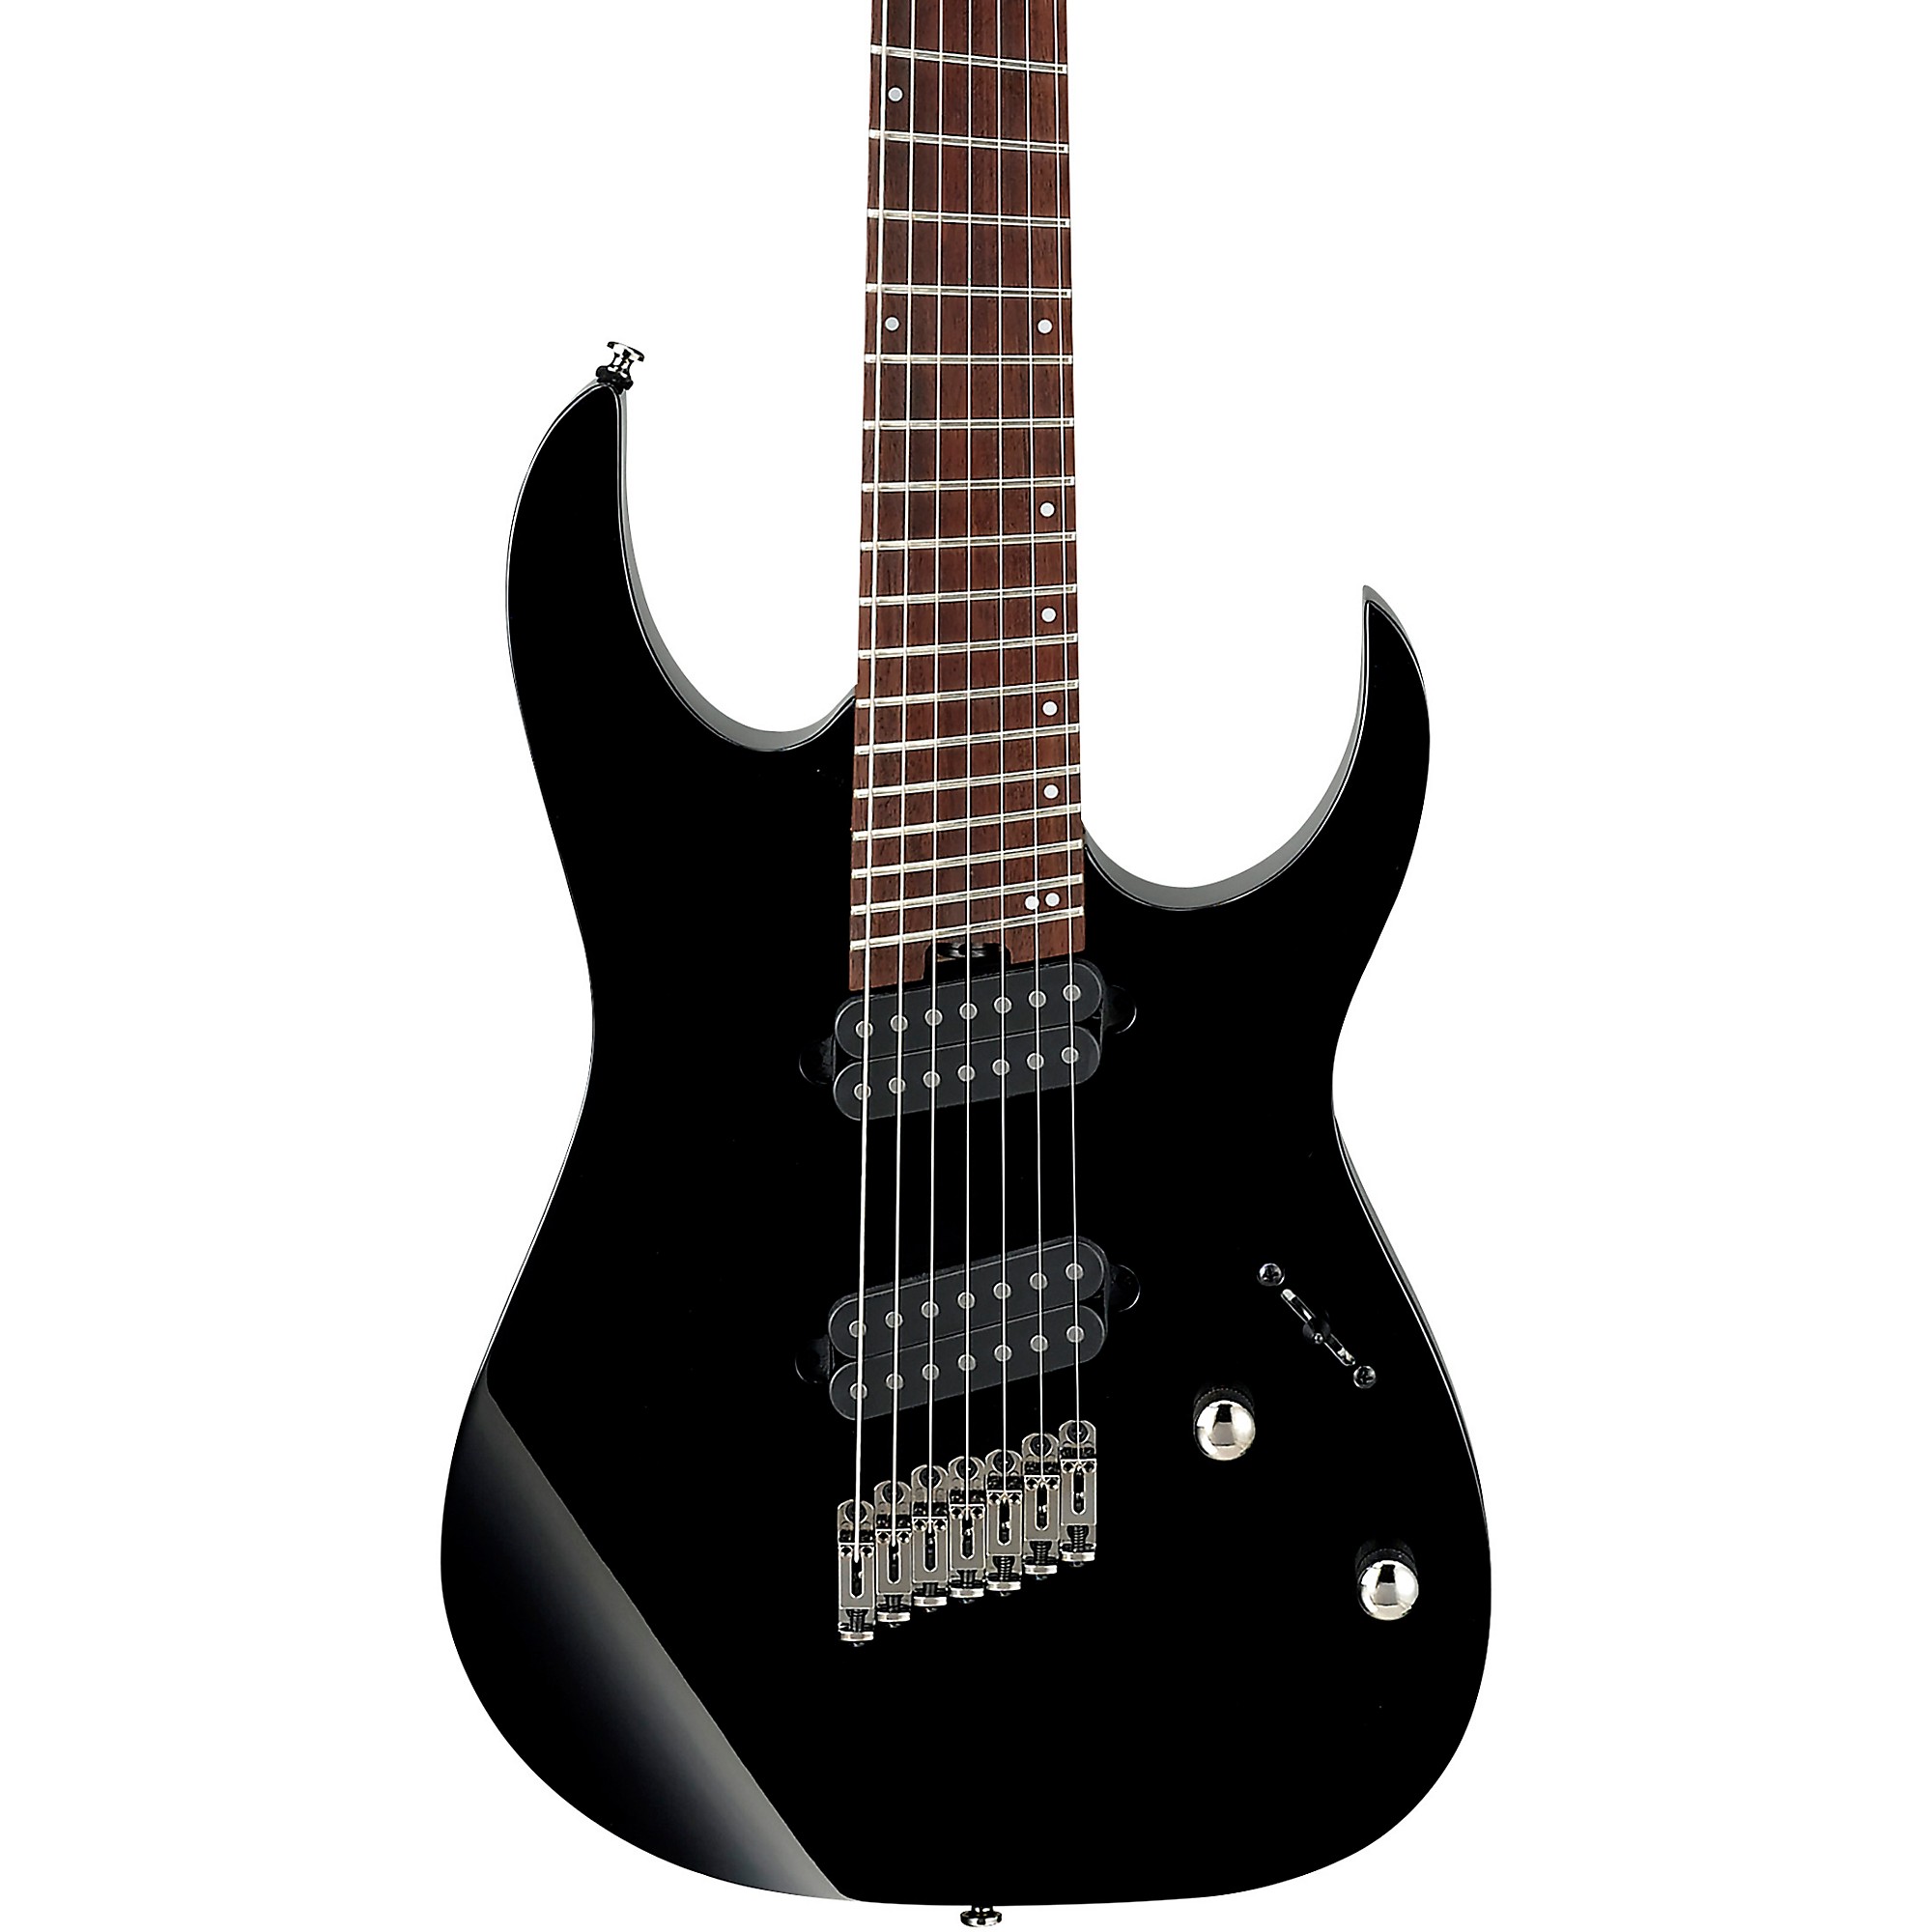 RGMS7 Multi-Scale 7-String Electric Guitar Guitar Center